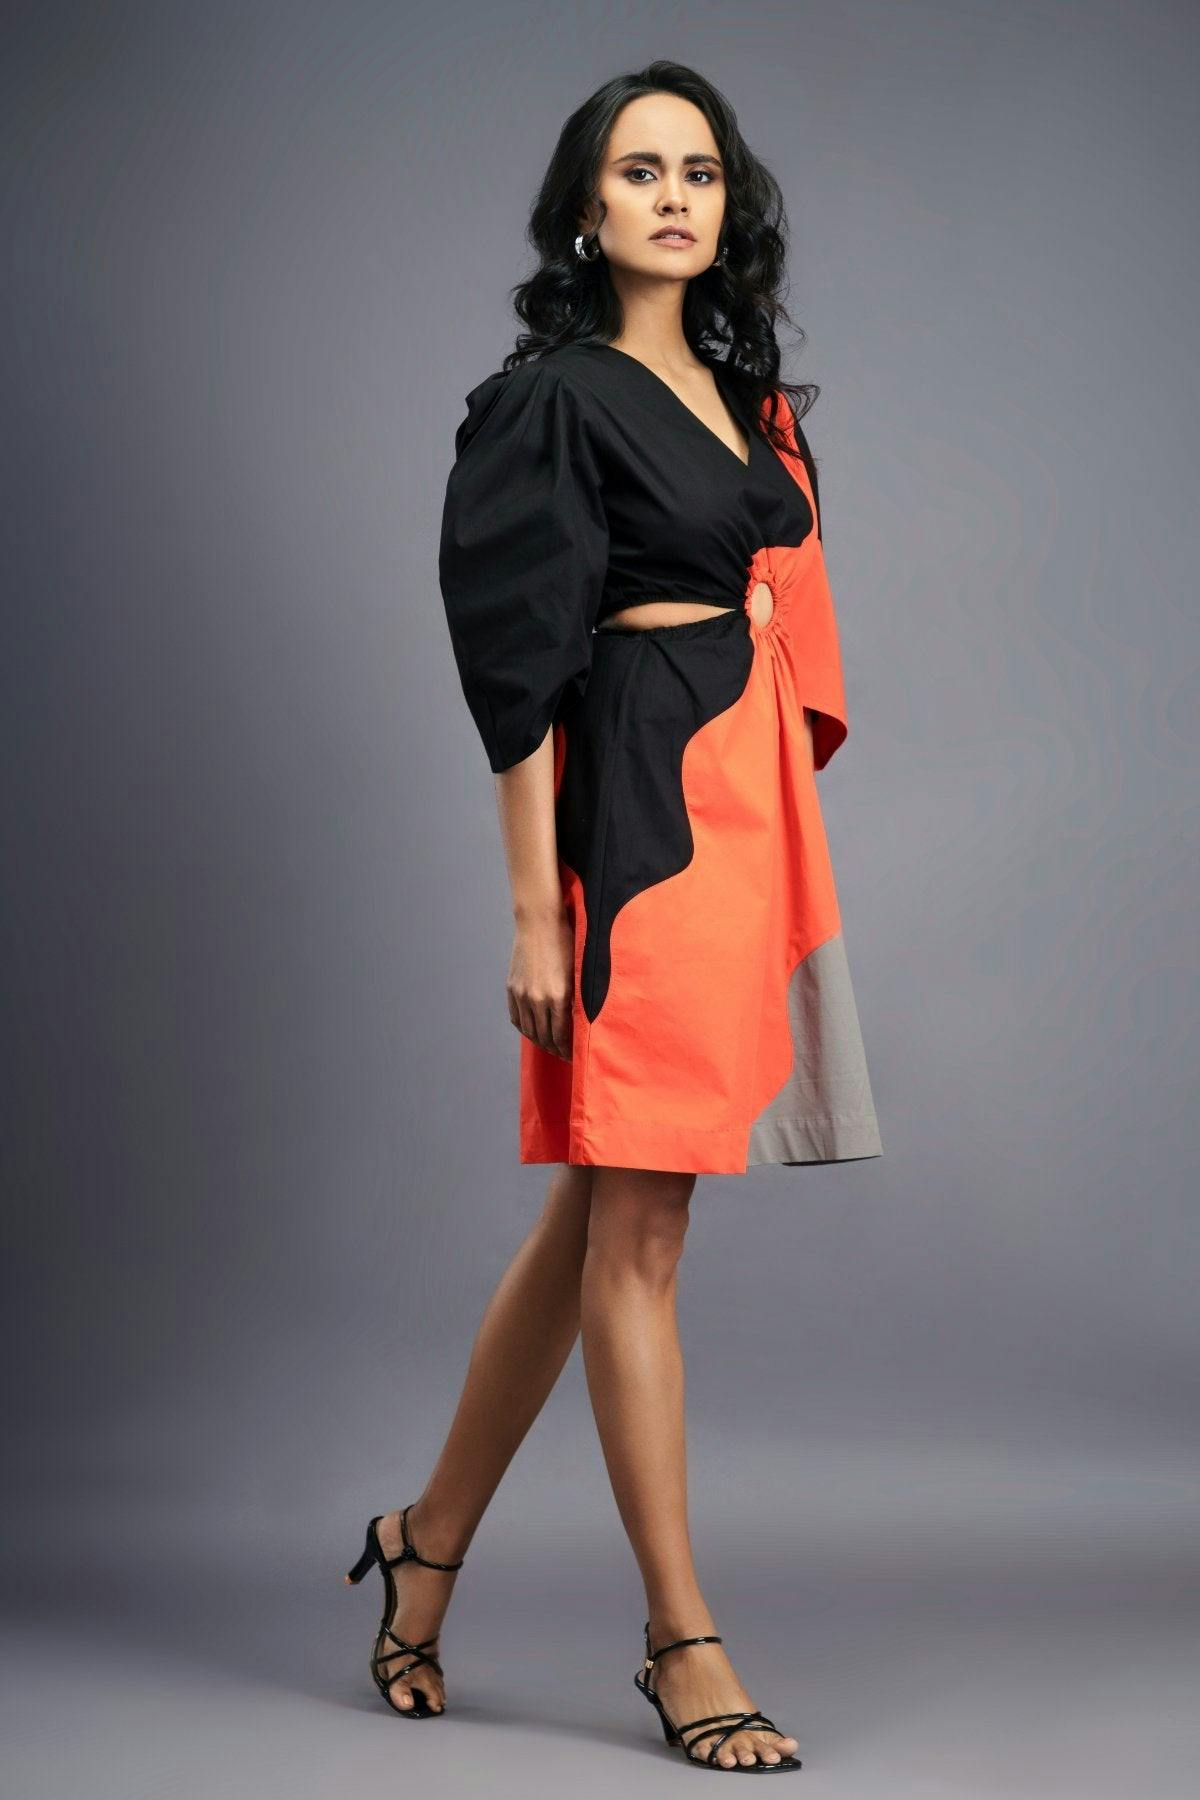 Thumbnail preview #2 for BB-1106-OG - Black Orange Cutout Dress